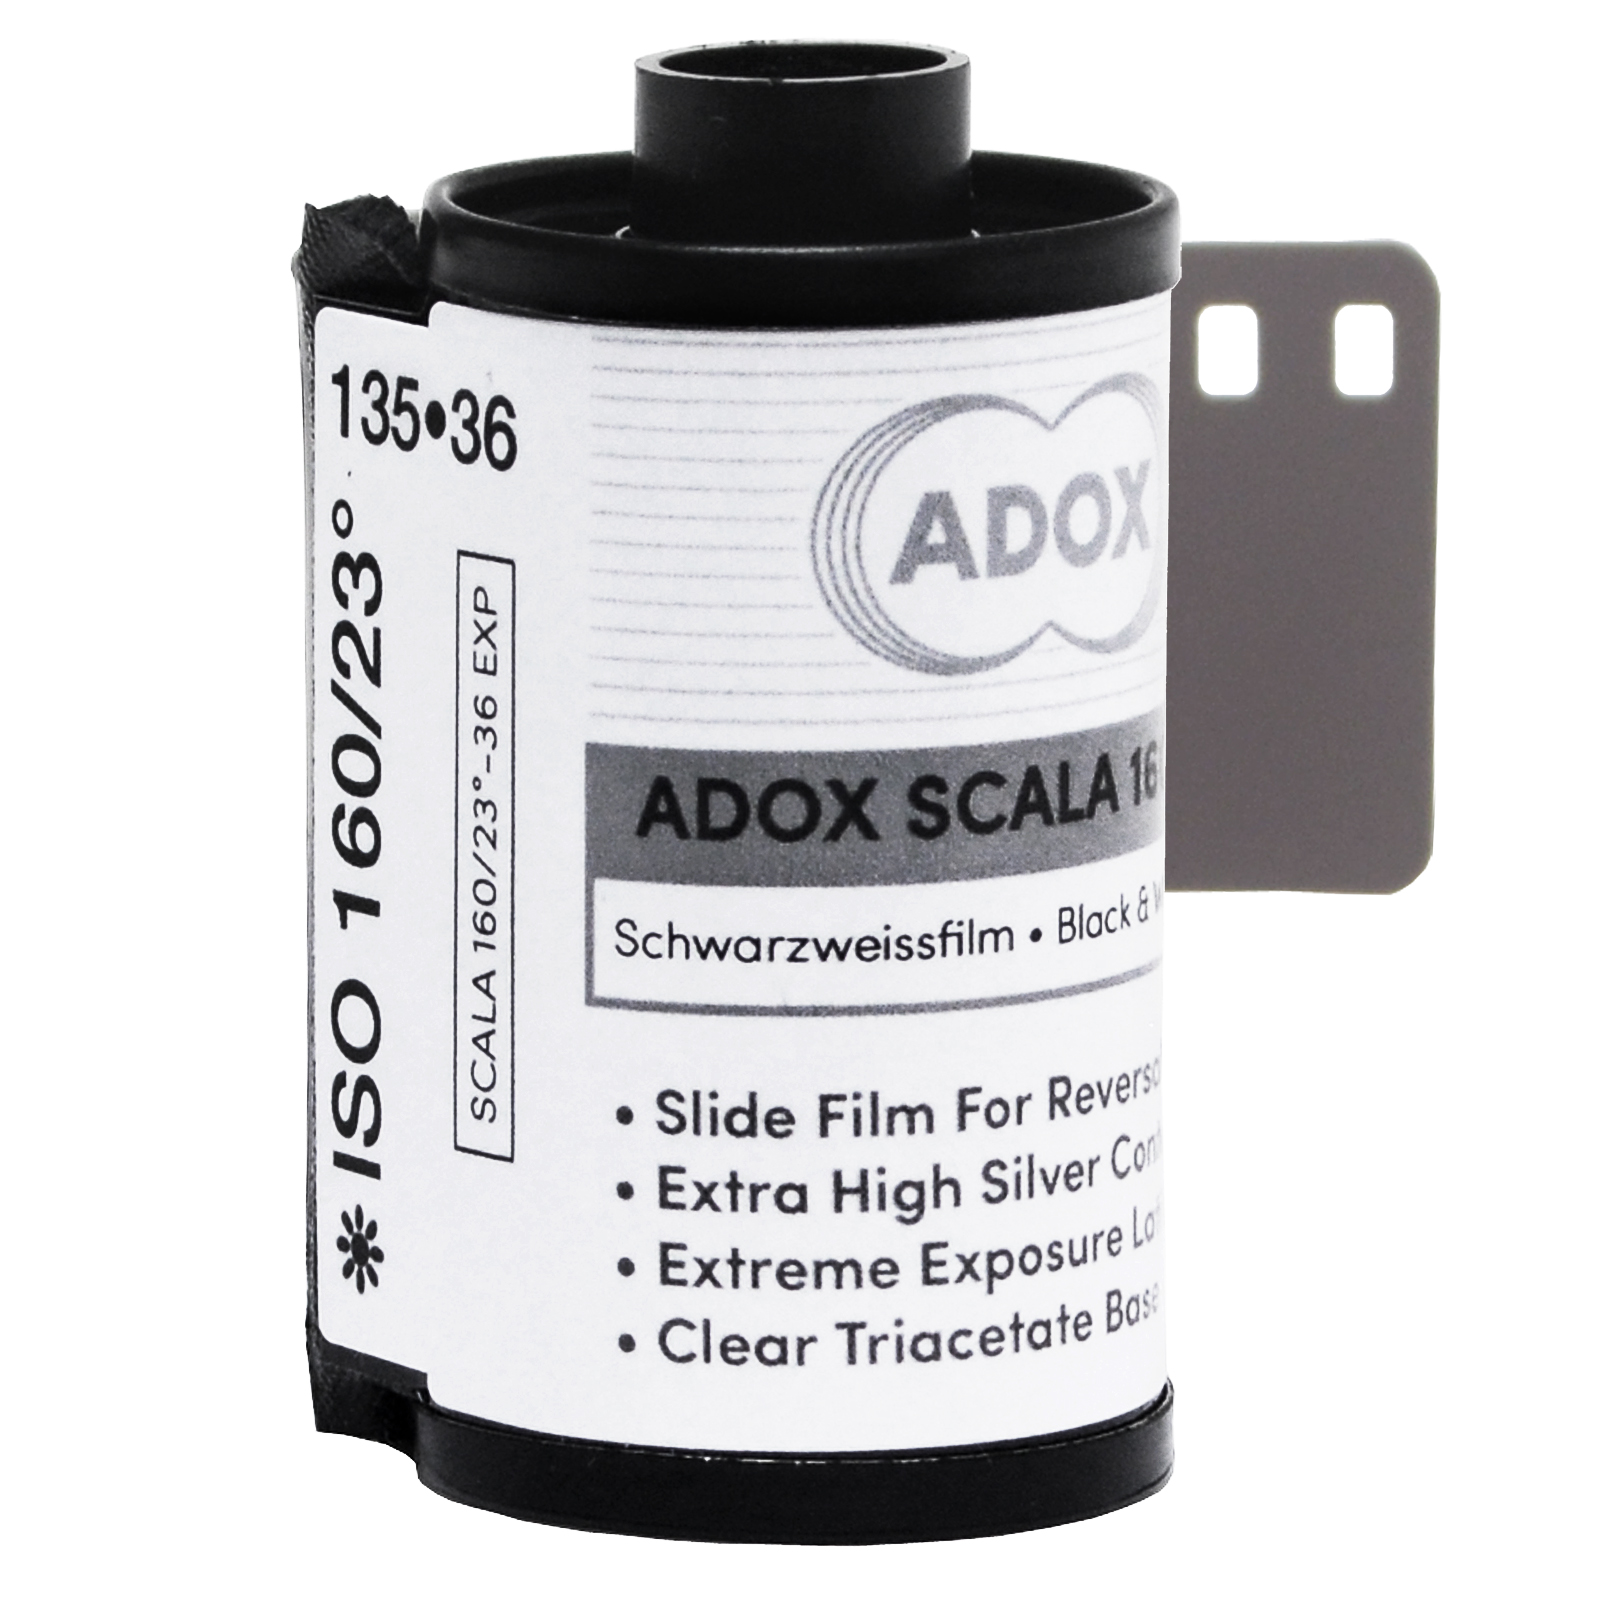 Adox scala 160